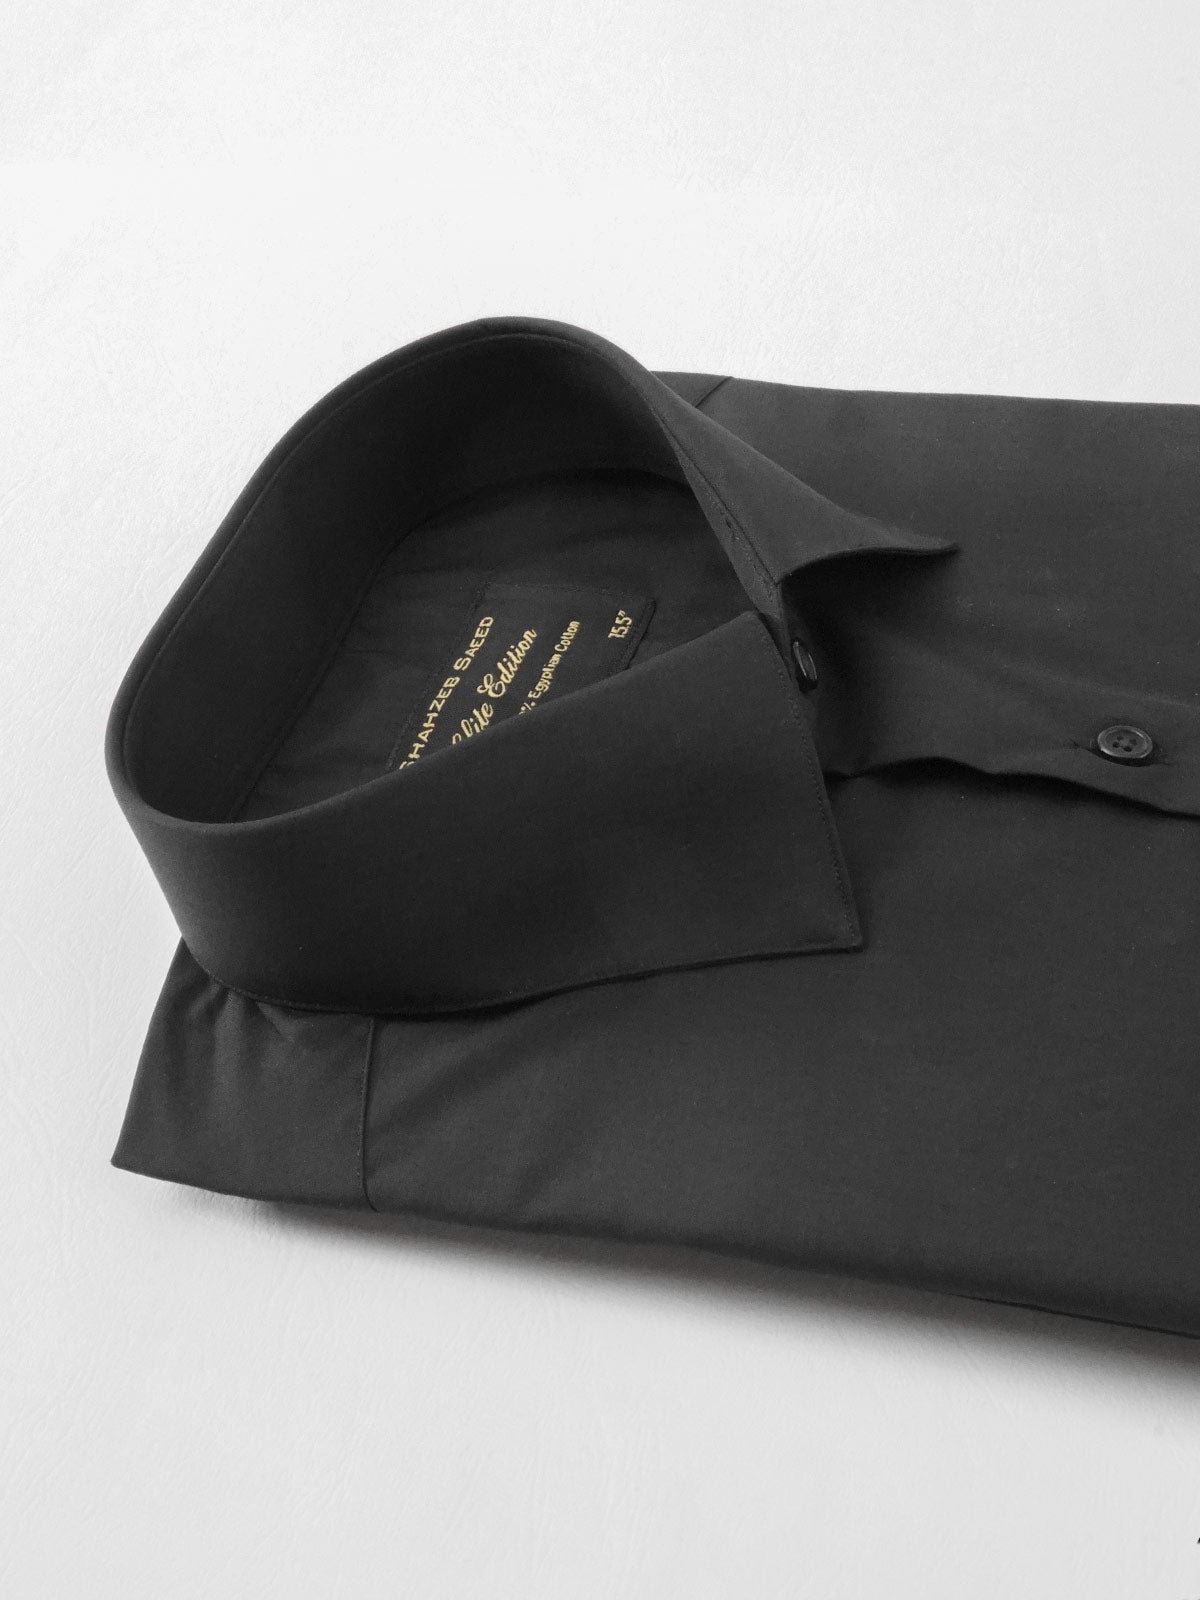 Black Plain, Elite Edition, French Collar Men’s Formal Shirt (FS-184)